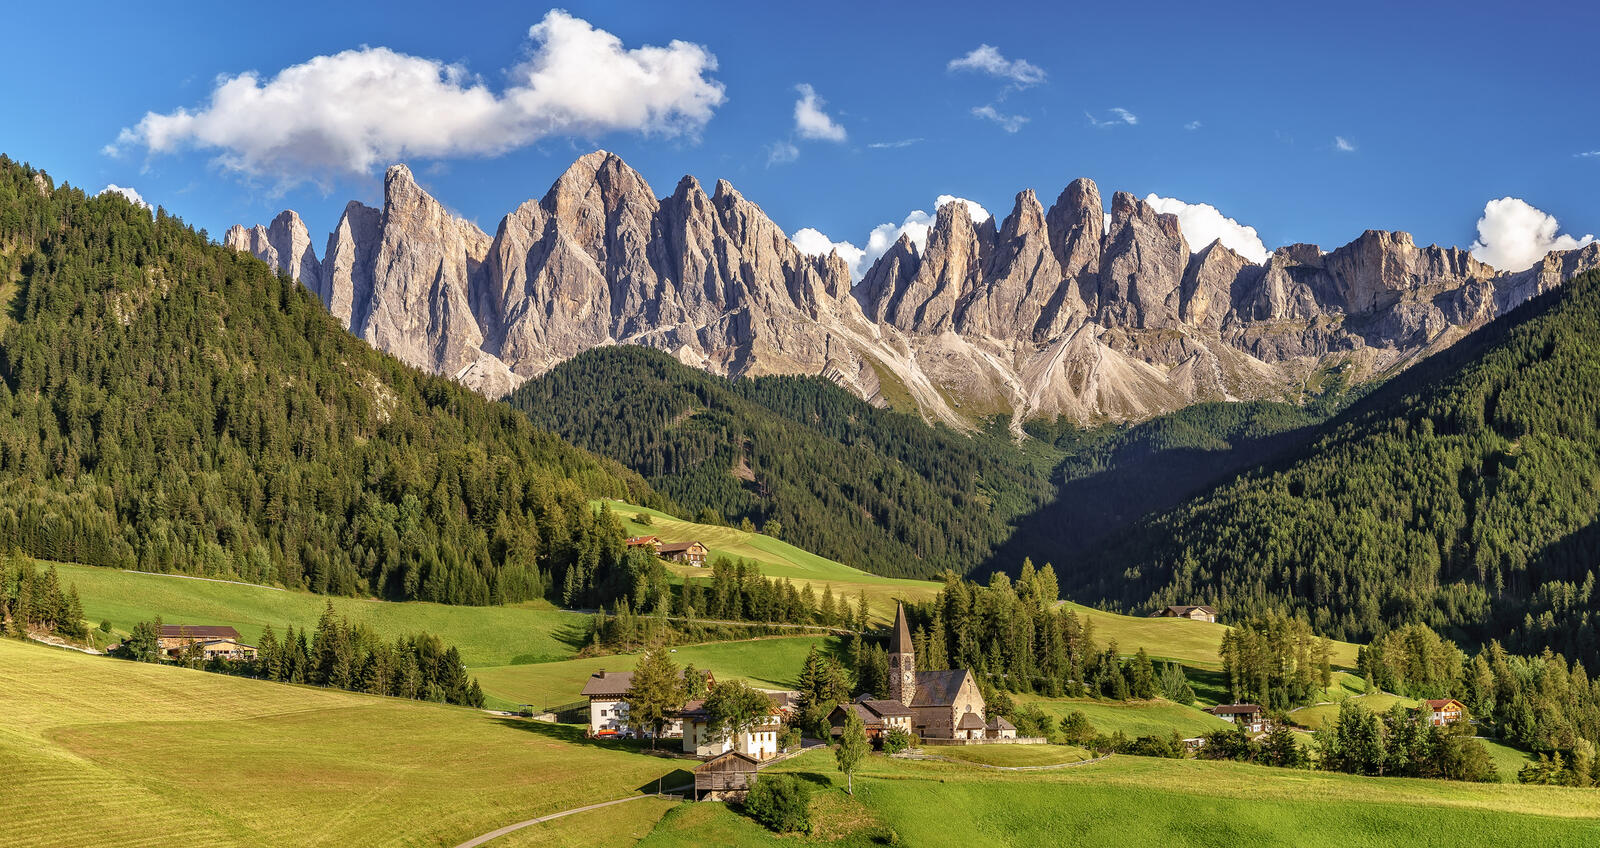 Обои Dolomite Alps South Tyrol Italy на рабочий стол